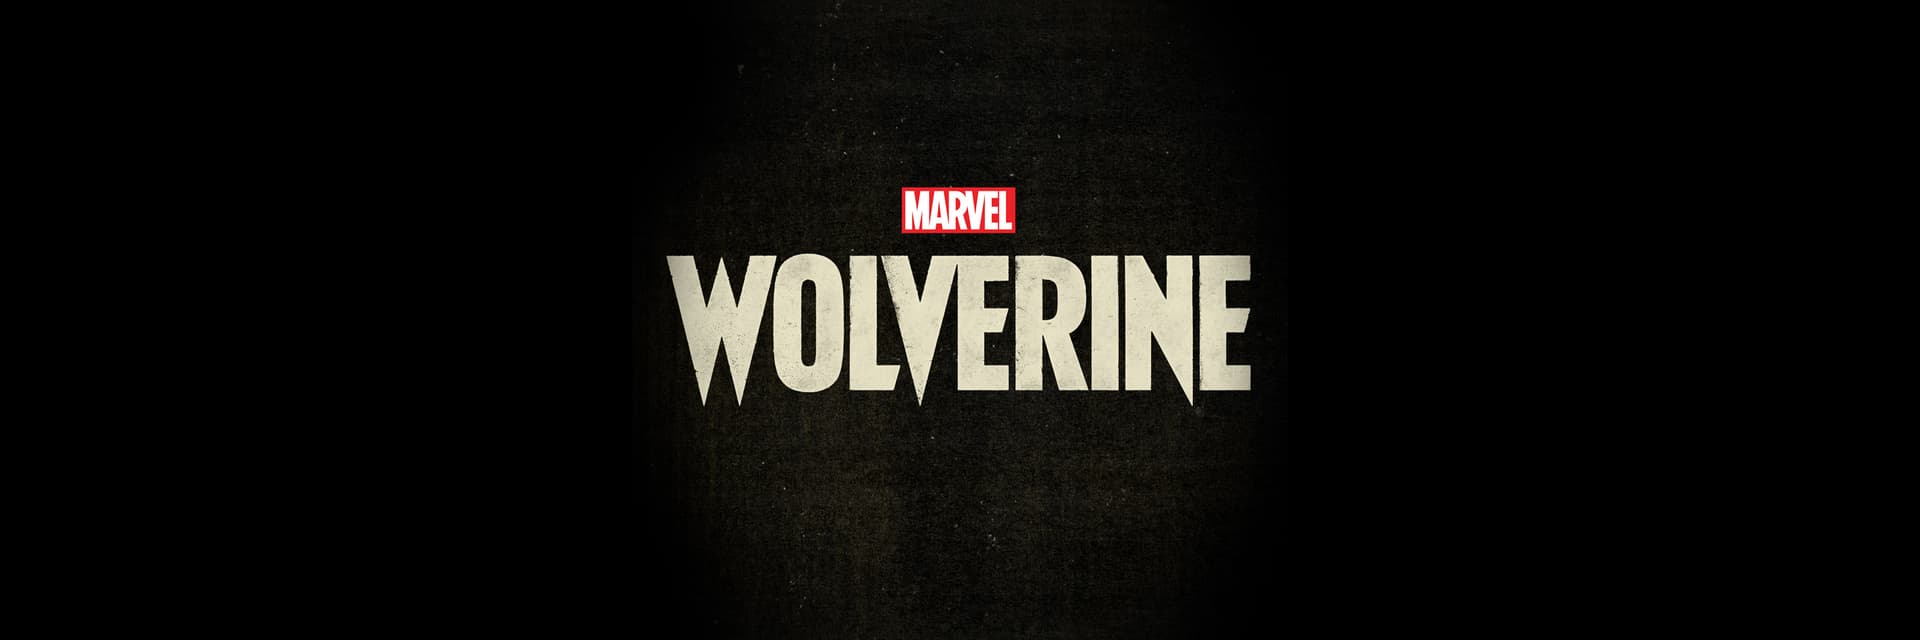 Marvel's Wolverine Game Logo on Black